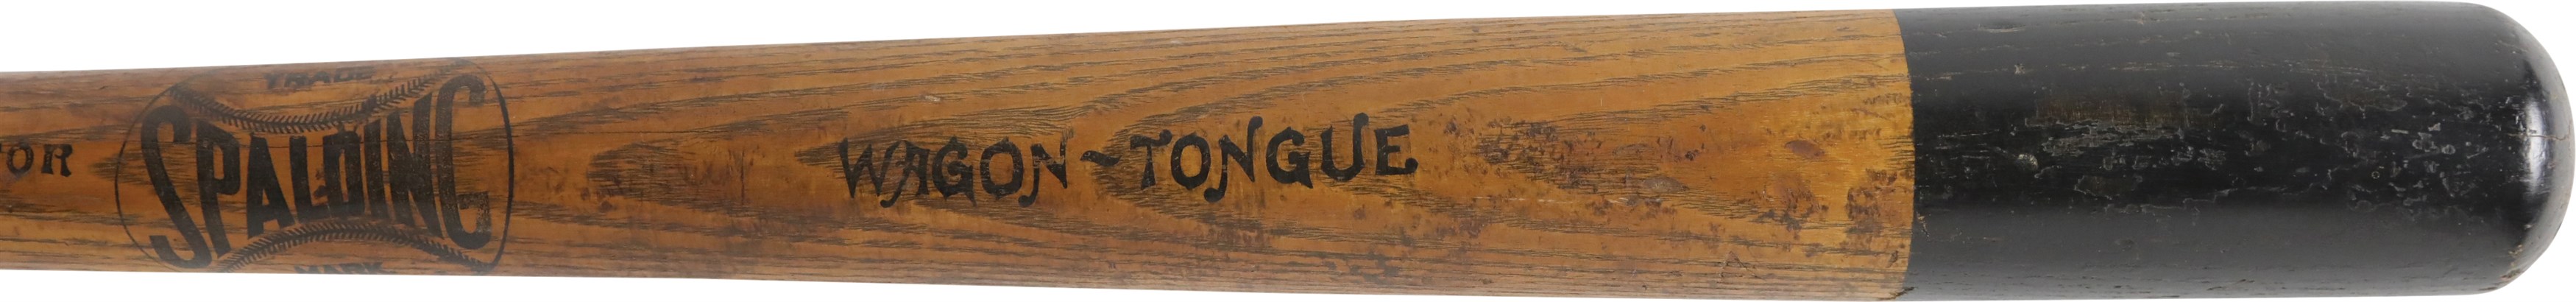 Baseball Memorabilia - 19th Century Spalding Wagon Tongue Stenciled Baseball Bat